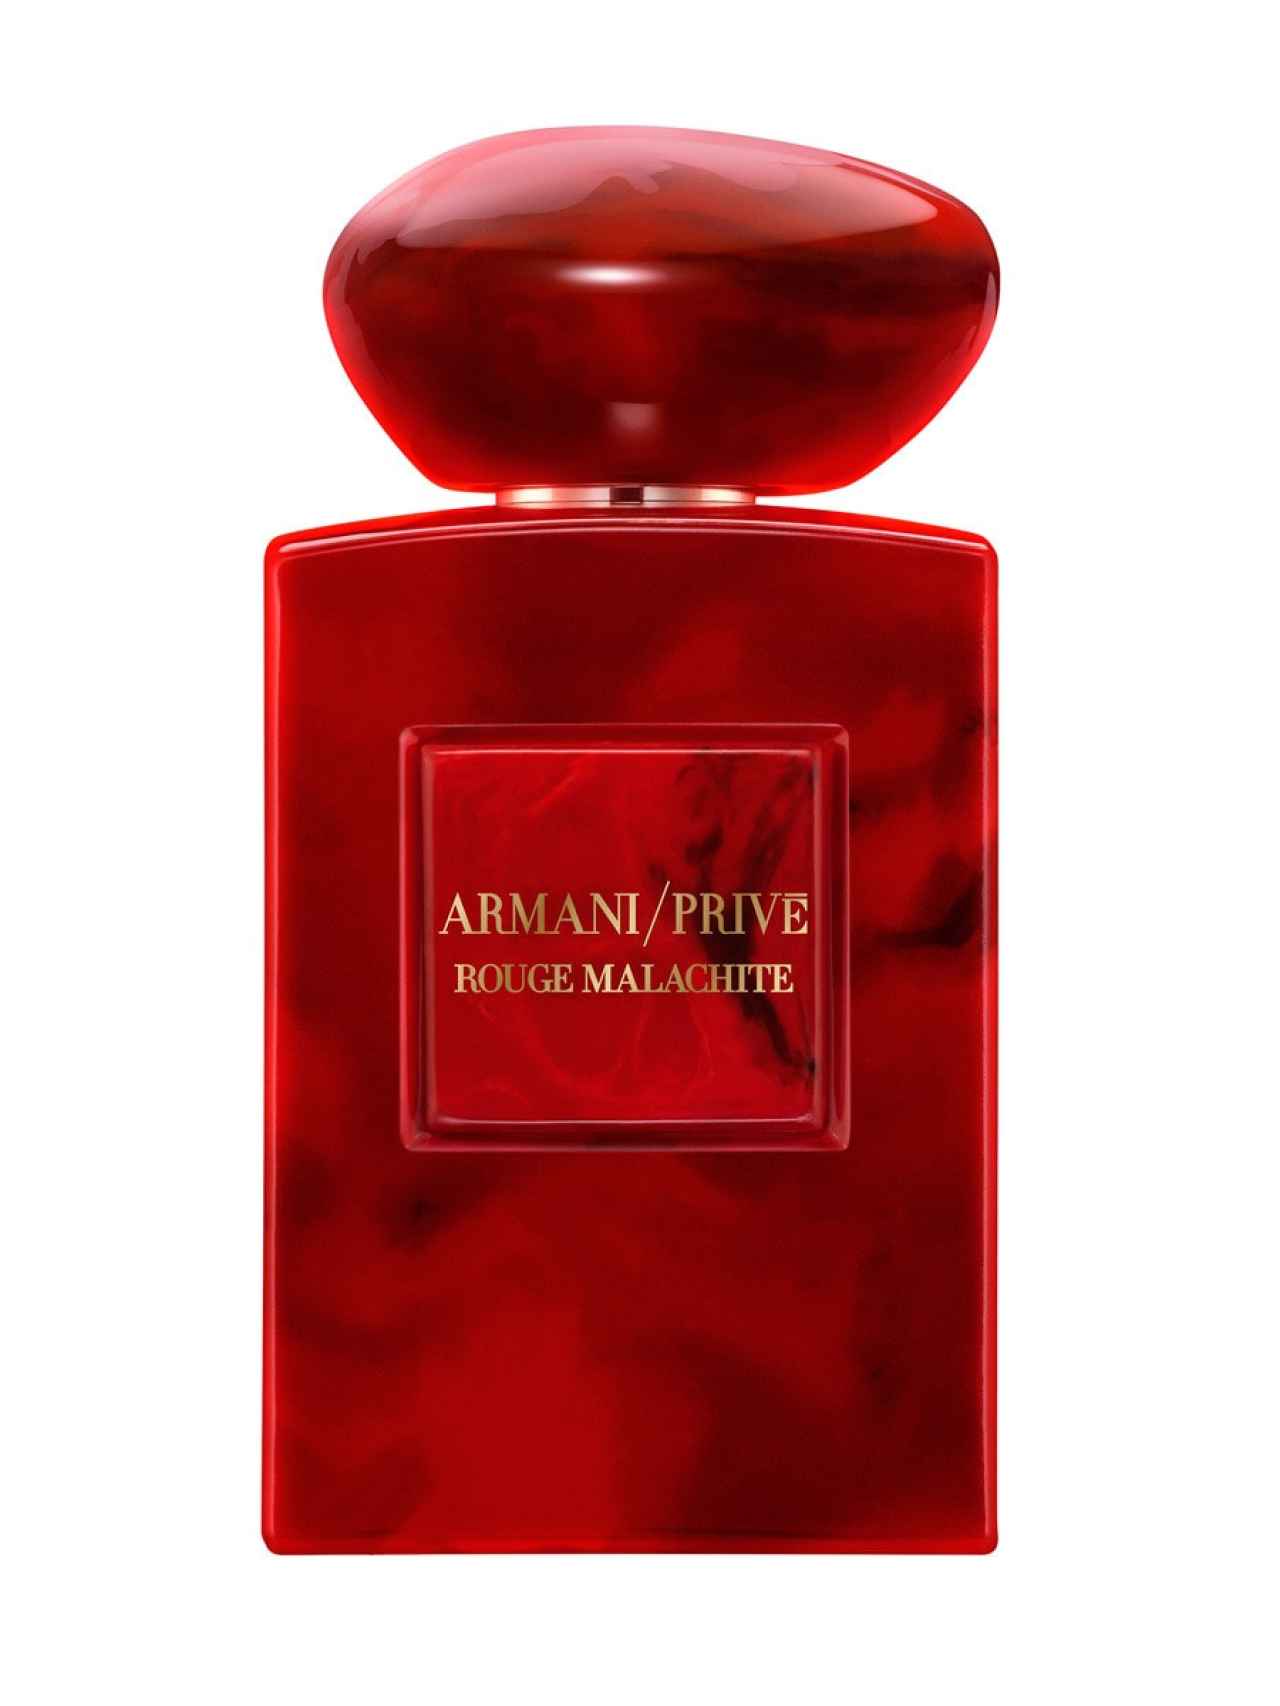 Perfume Rouge Malachite de Armani Privé.